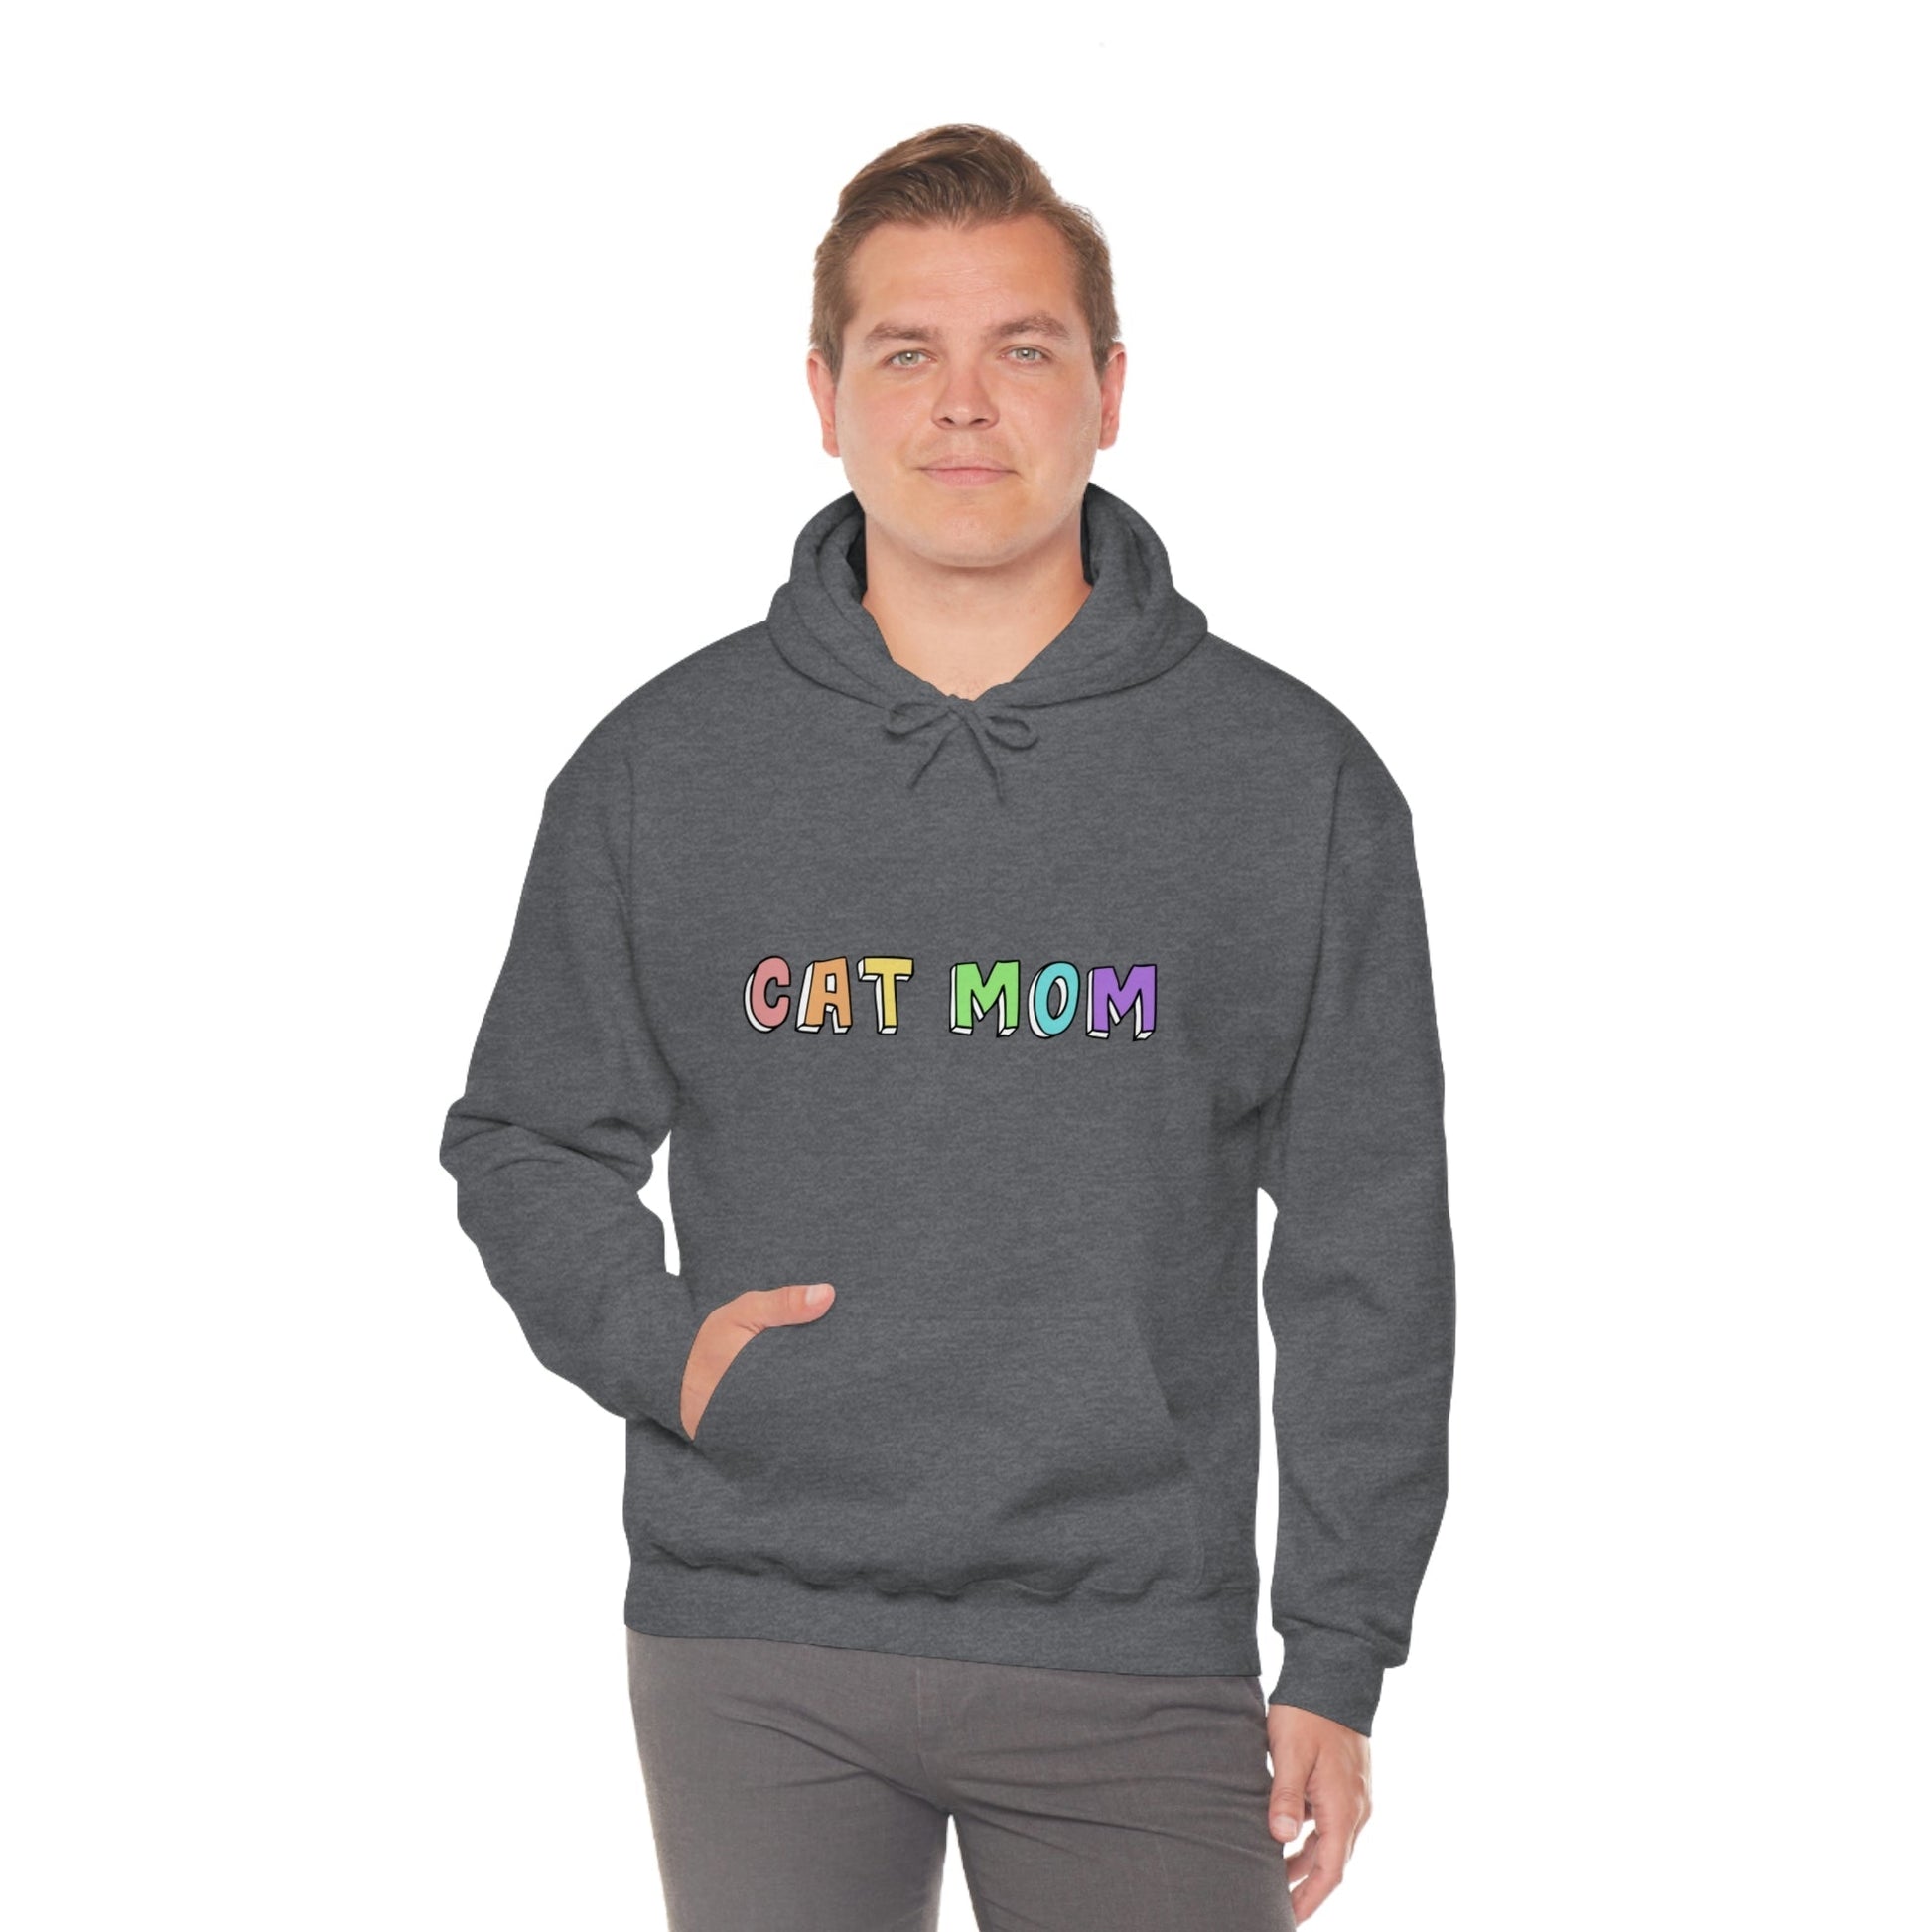 Cat Mom | Hooded Sweatshirt - Detezi Designs-20696154520632893110